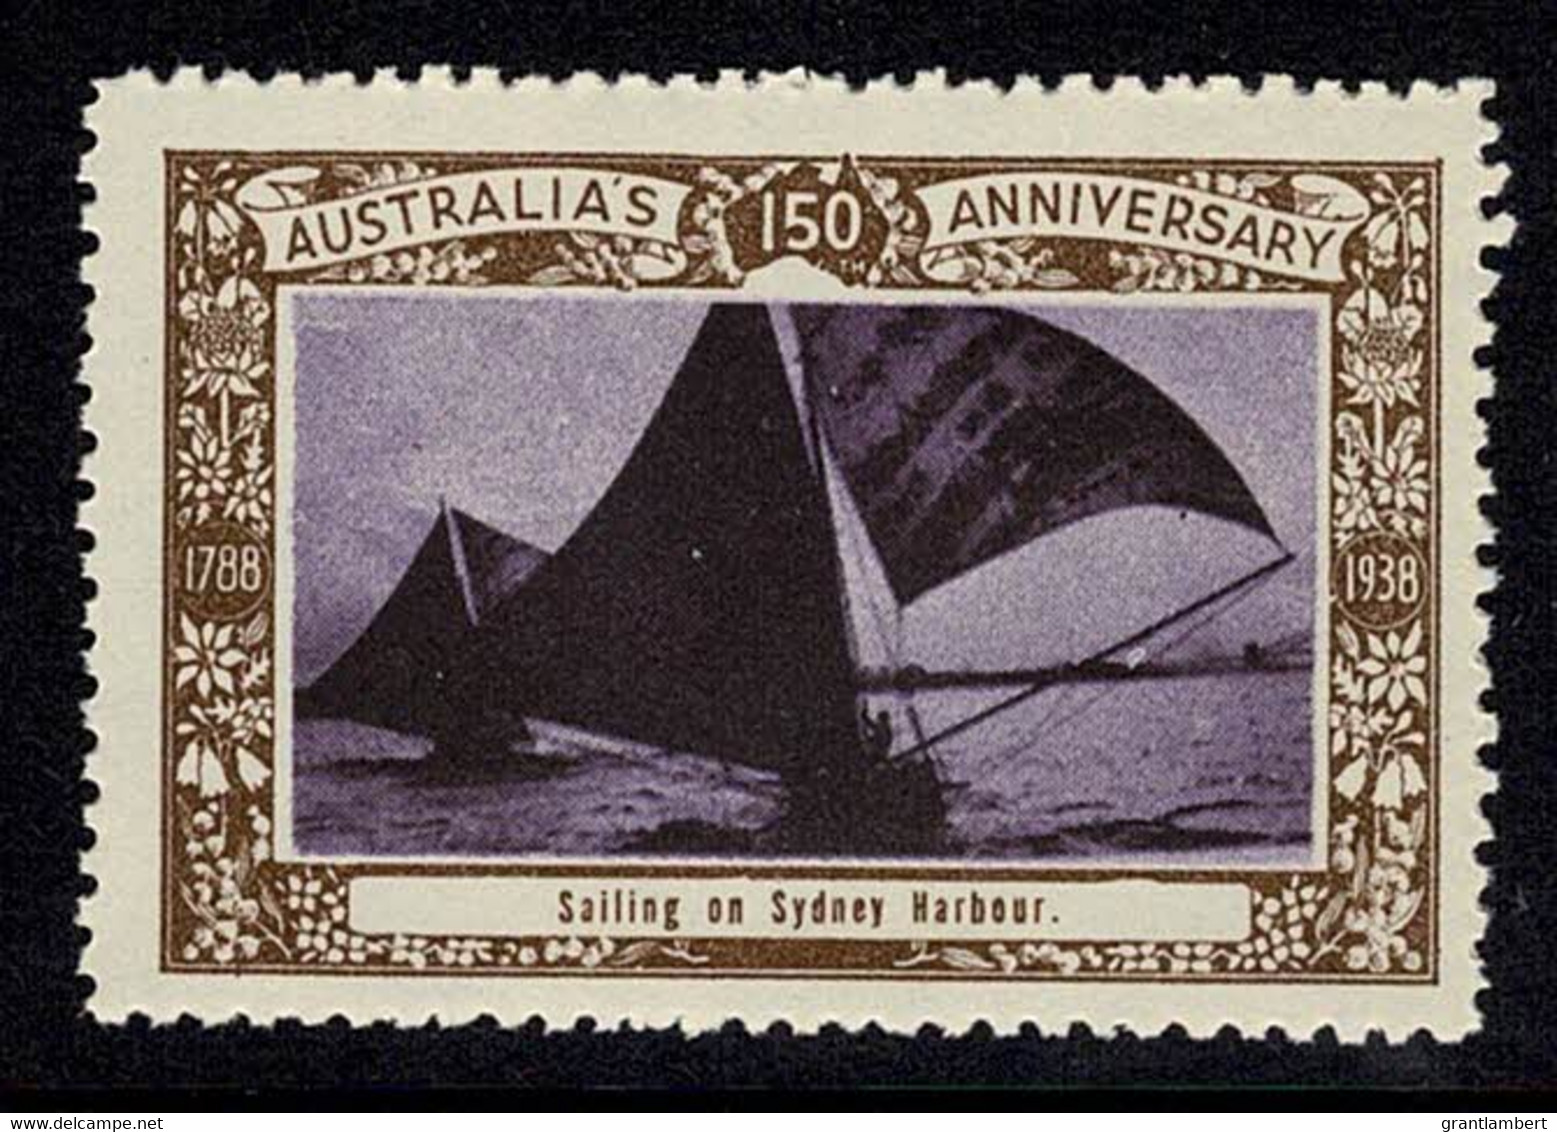 Australia 1938 Sailing On Sydney Harbour - NSW 150th Anniversary Cinderella MNH - Cinderelas